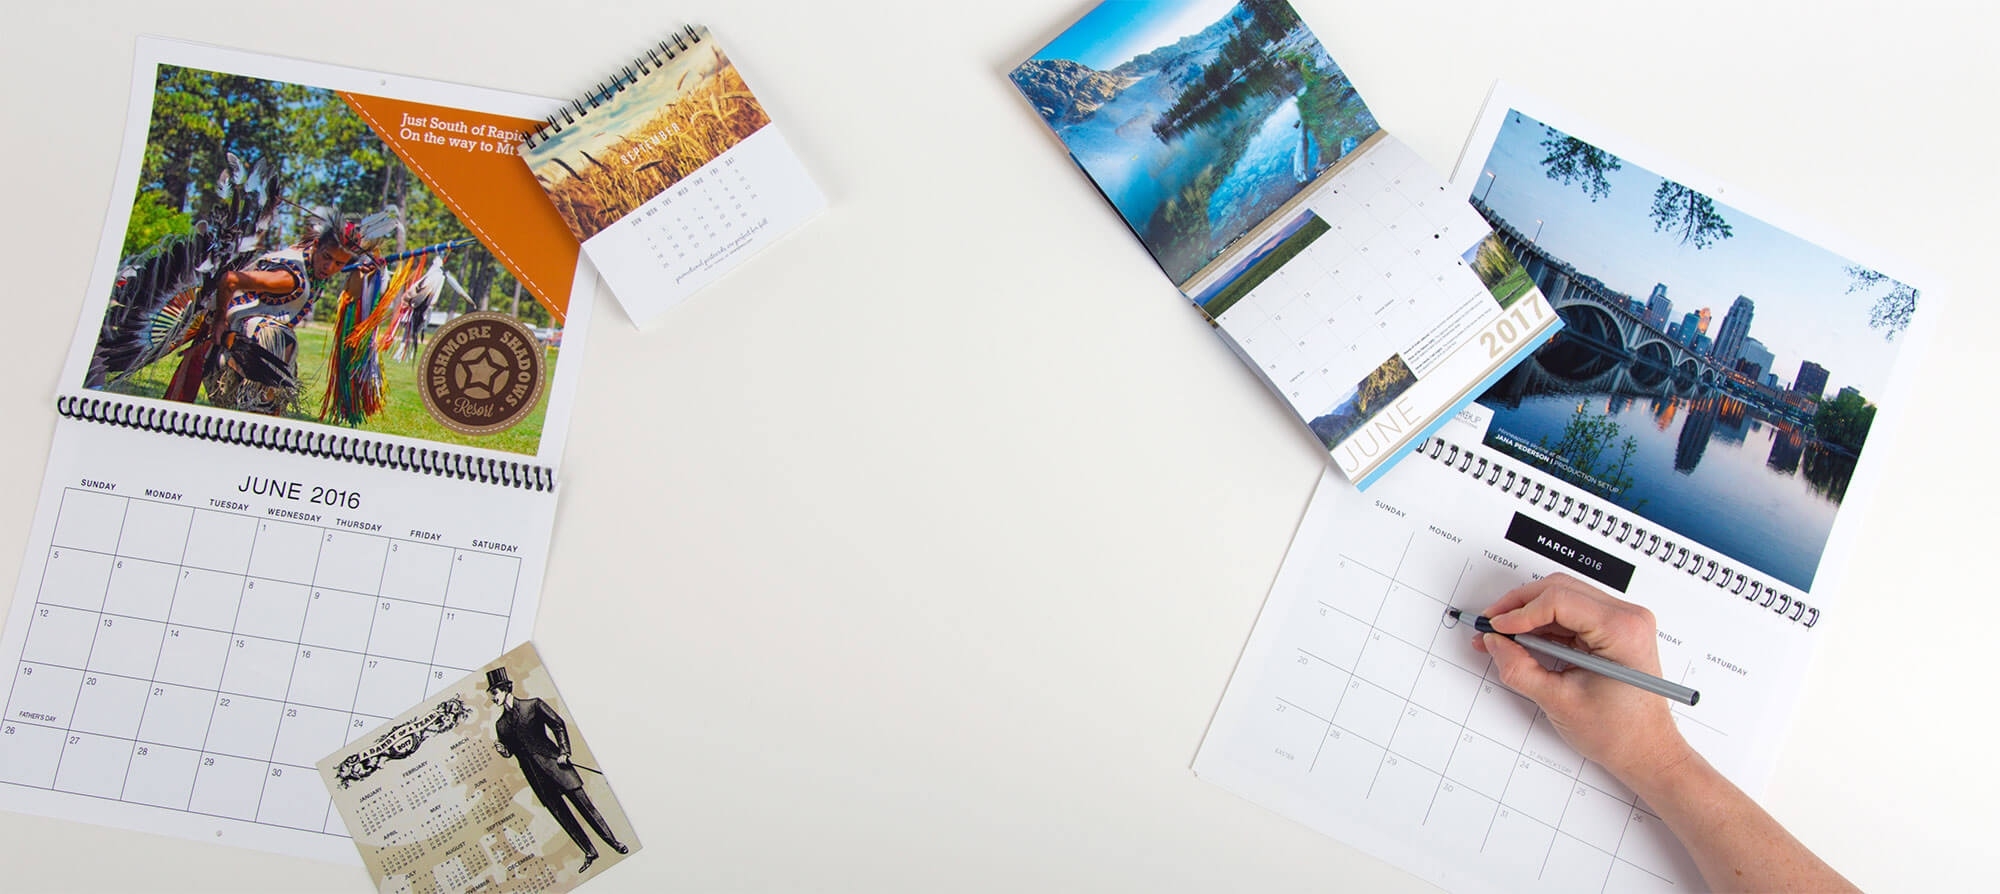 Custom Calendar Printing | Personalized Calendars | Smartpress Calendar Printing Companies Near Me